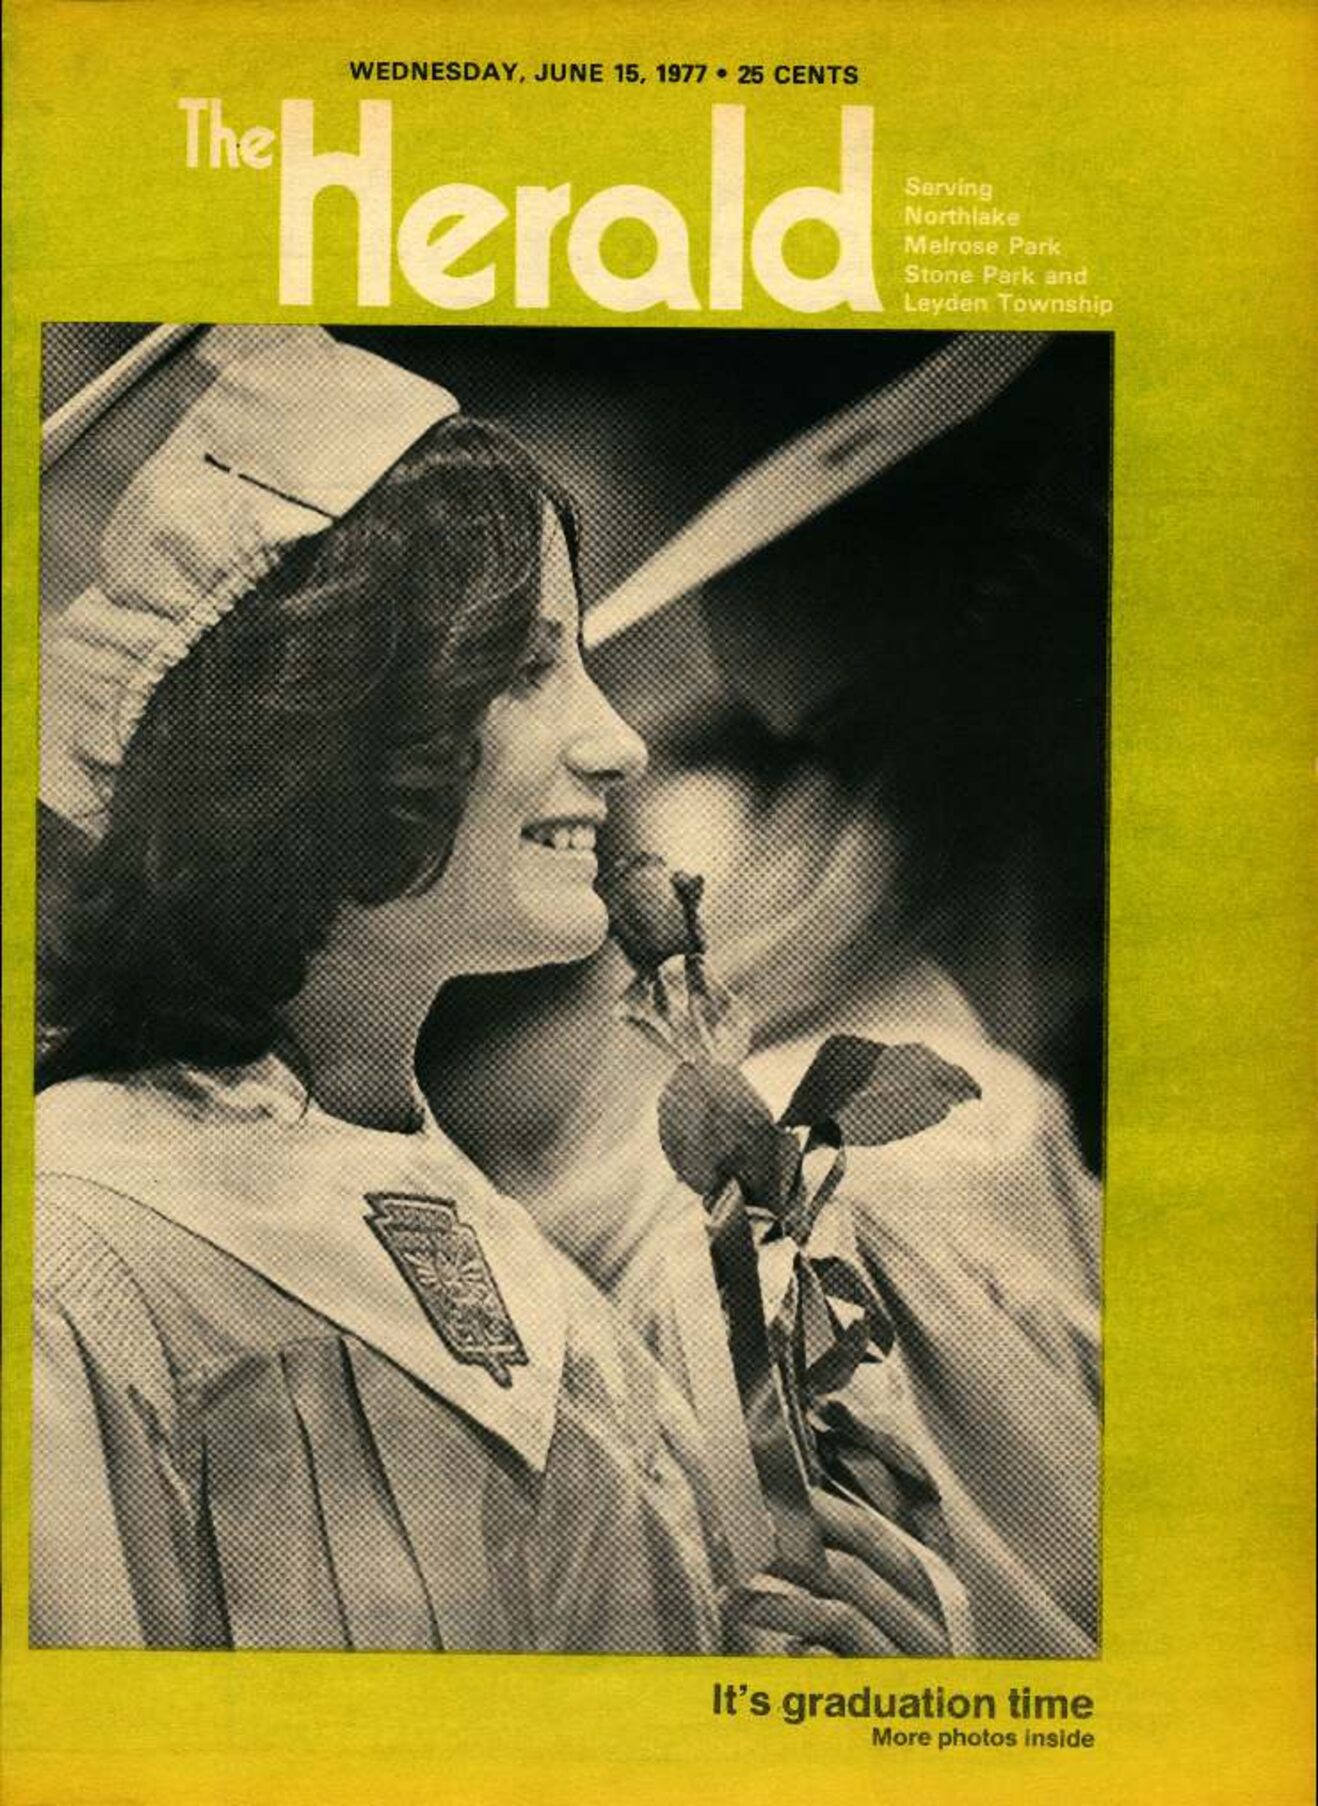 The Herald – 19770615